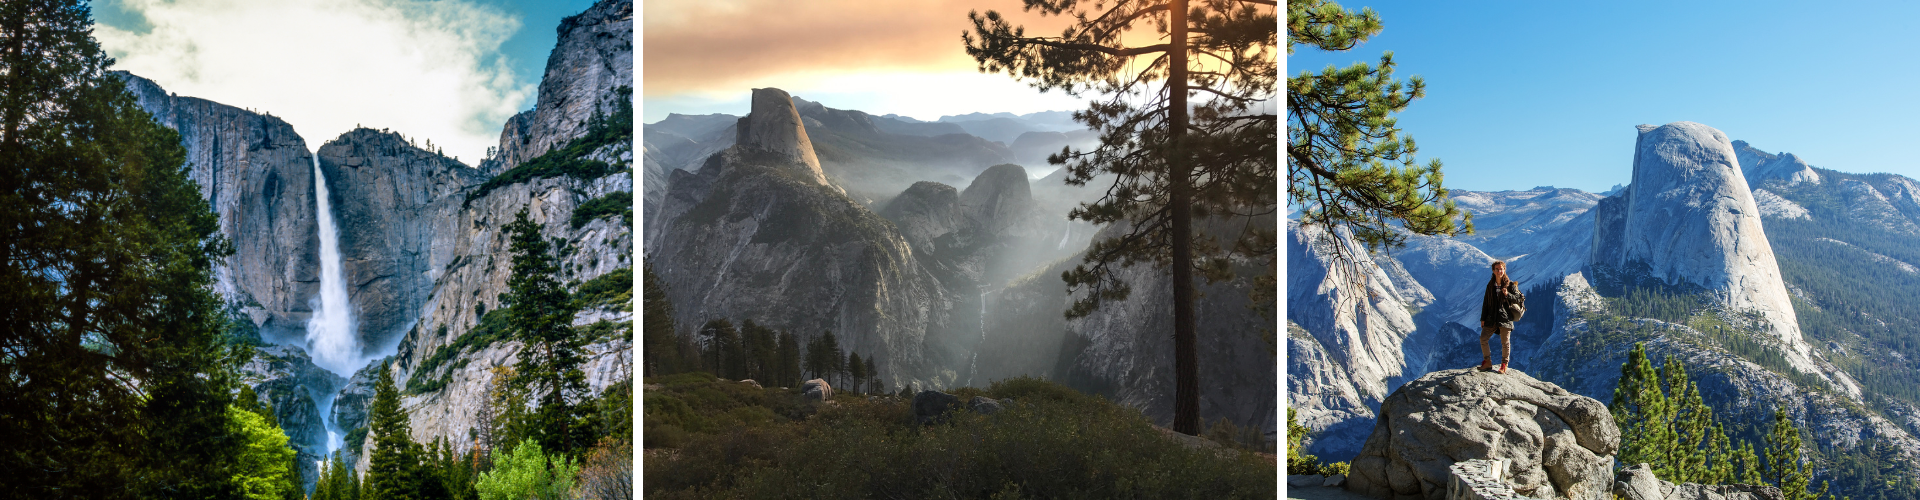 Three Photo Collage of Yosemite National Park: Waterfall, Mountains, Hiker